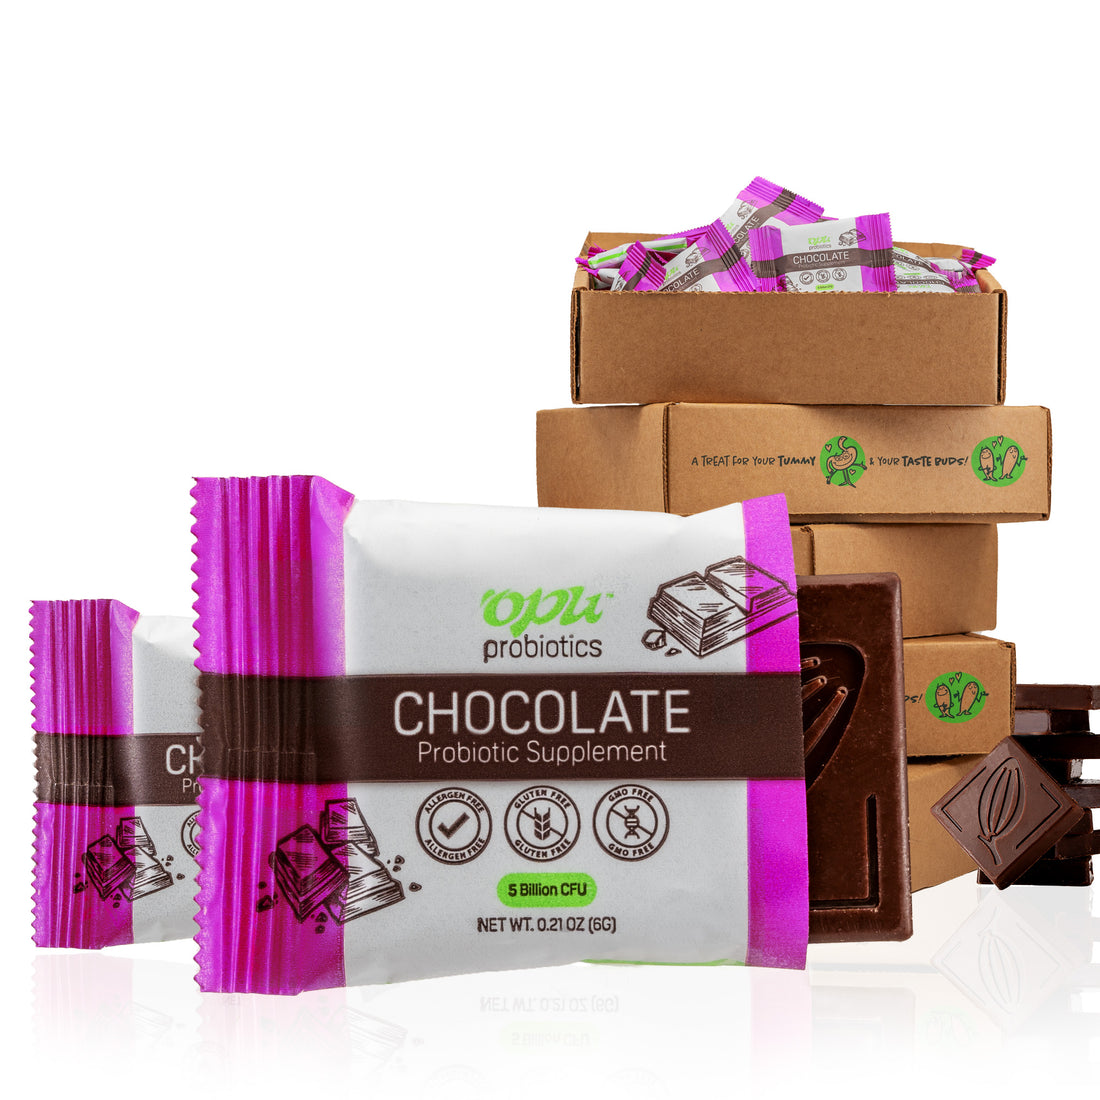 NEW Opu Probiotics Chocolate Supplement! 30 Day Supply